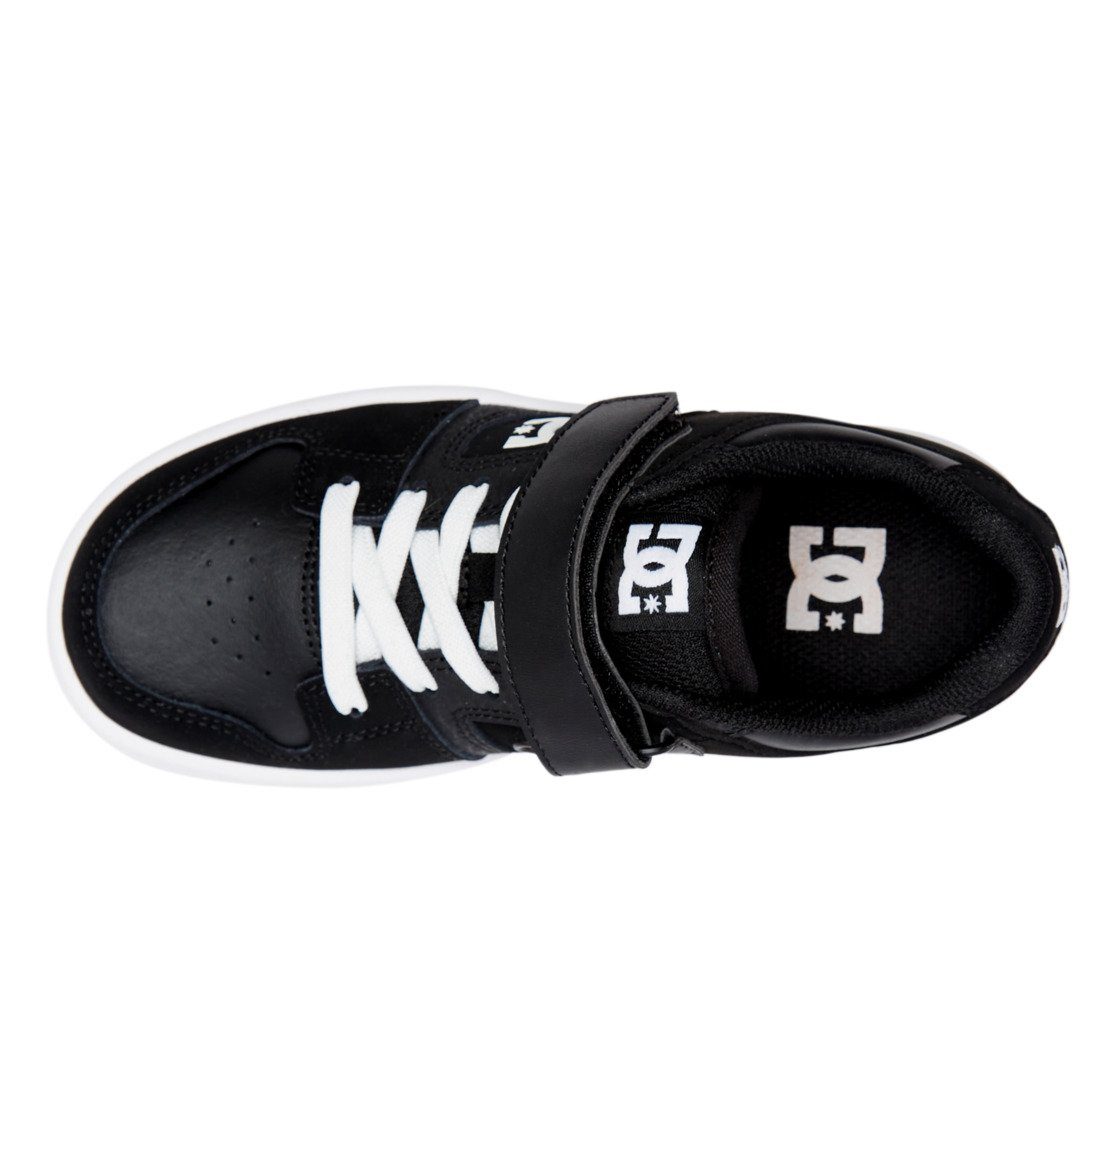 Shoes Manteca DC Black/Black/White V 4 Sneaker